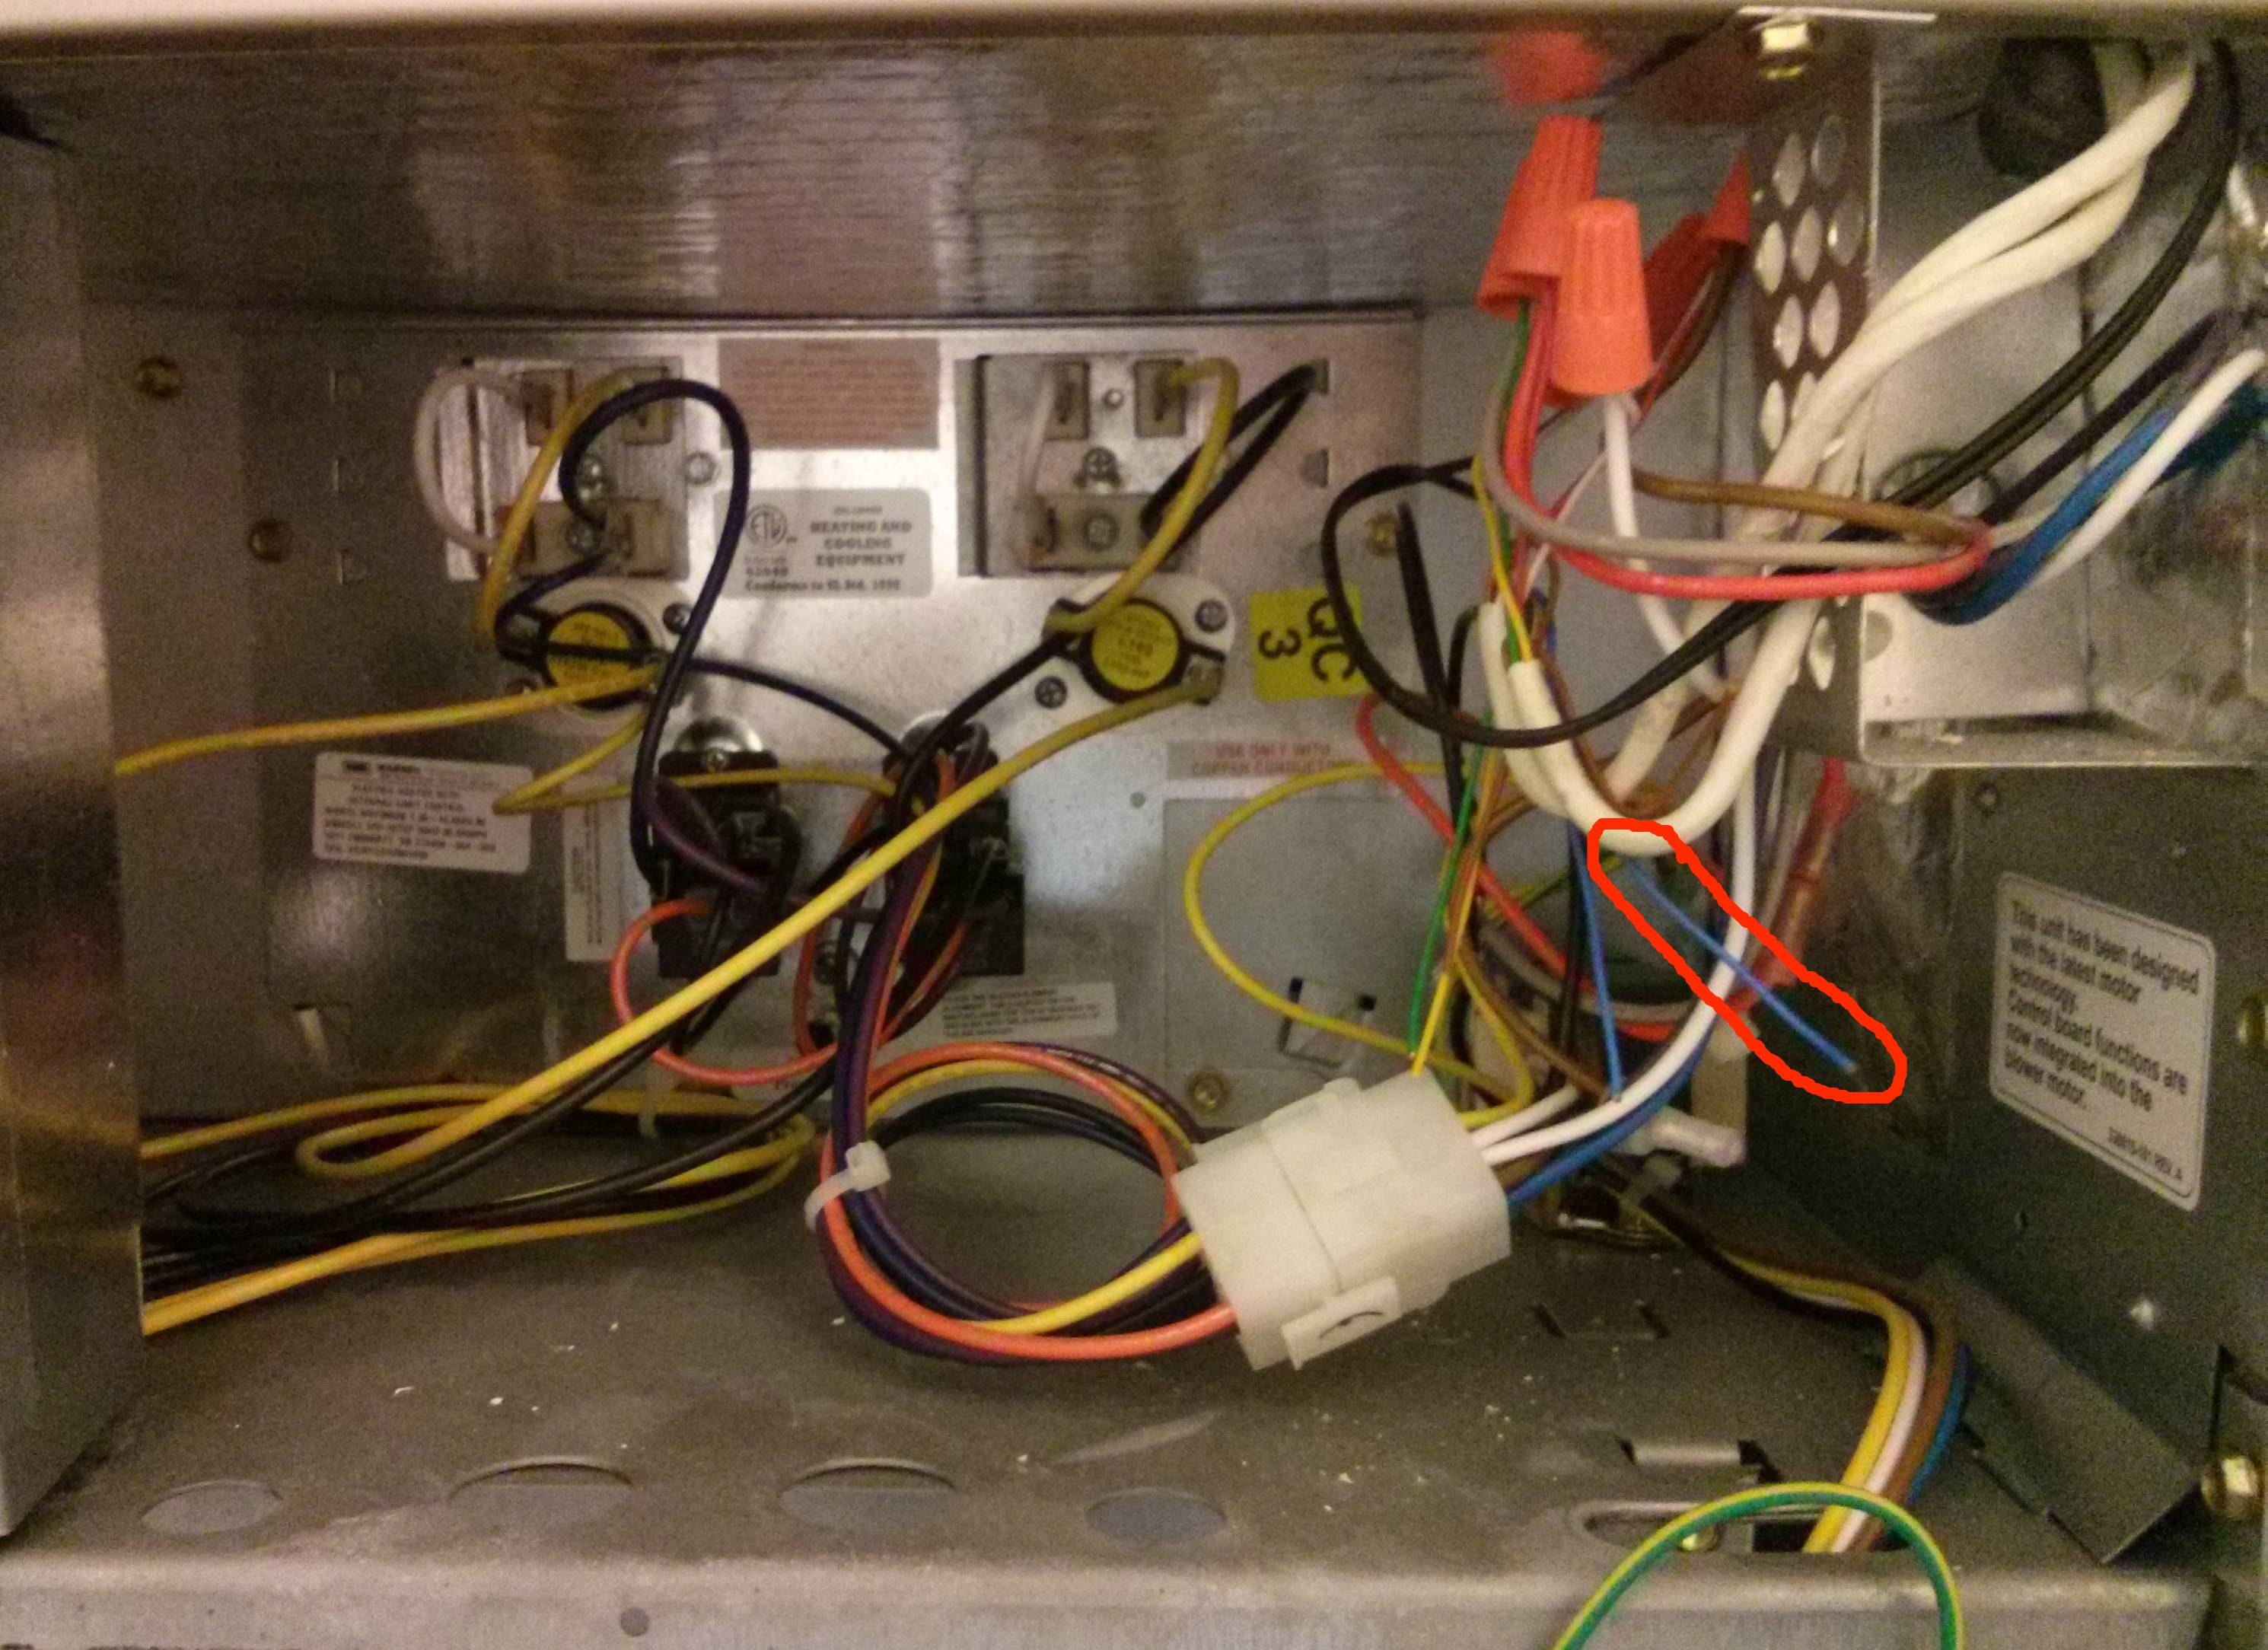 payne air handler wiring diagram